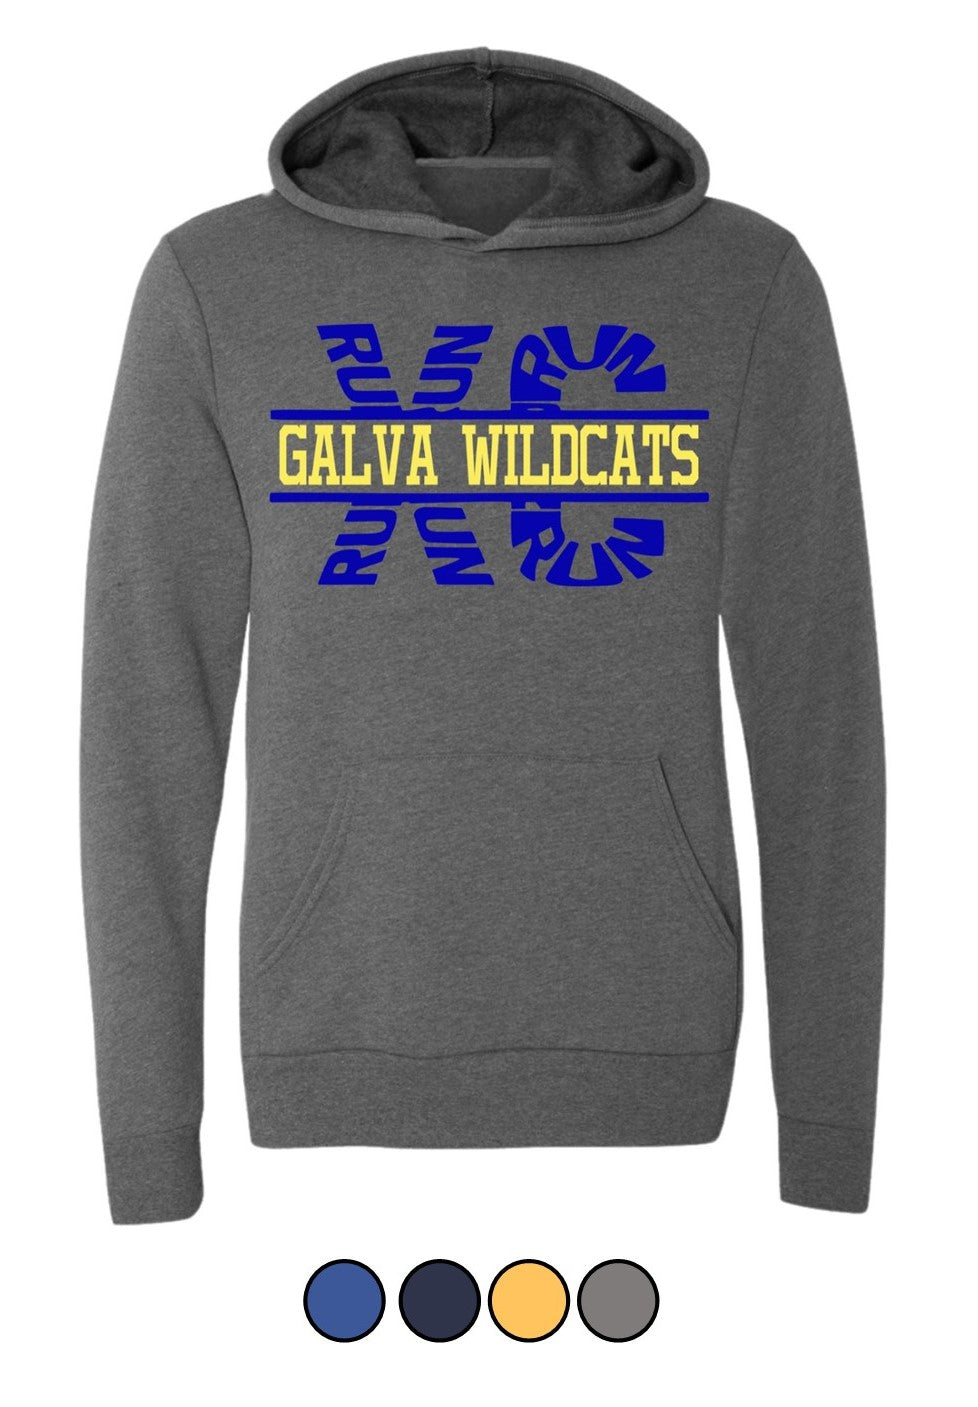 Galva Wildcats Cross Country Run Hoodie Sweatshirt